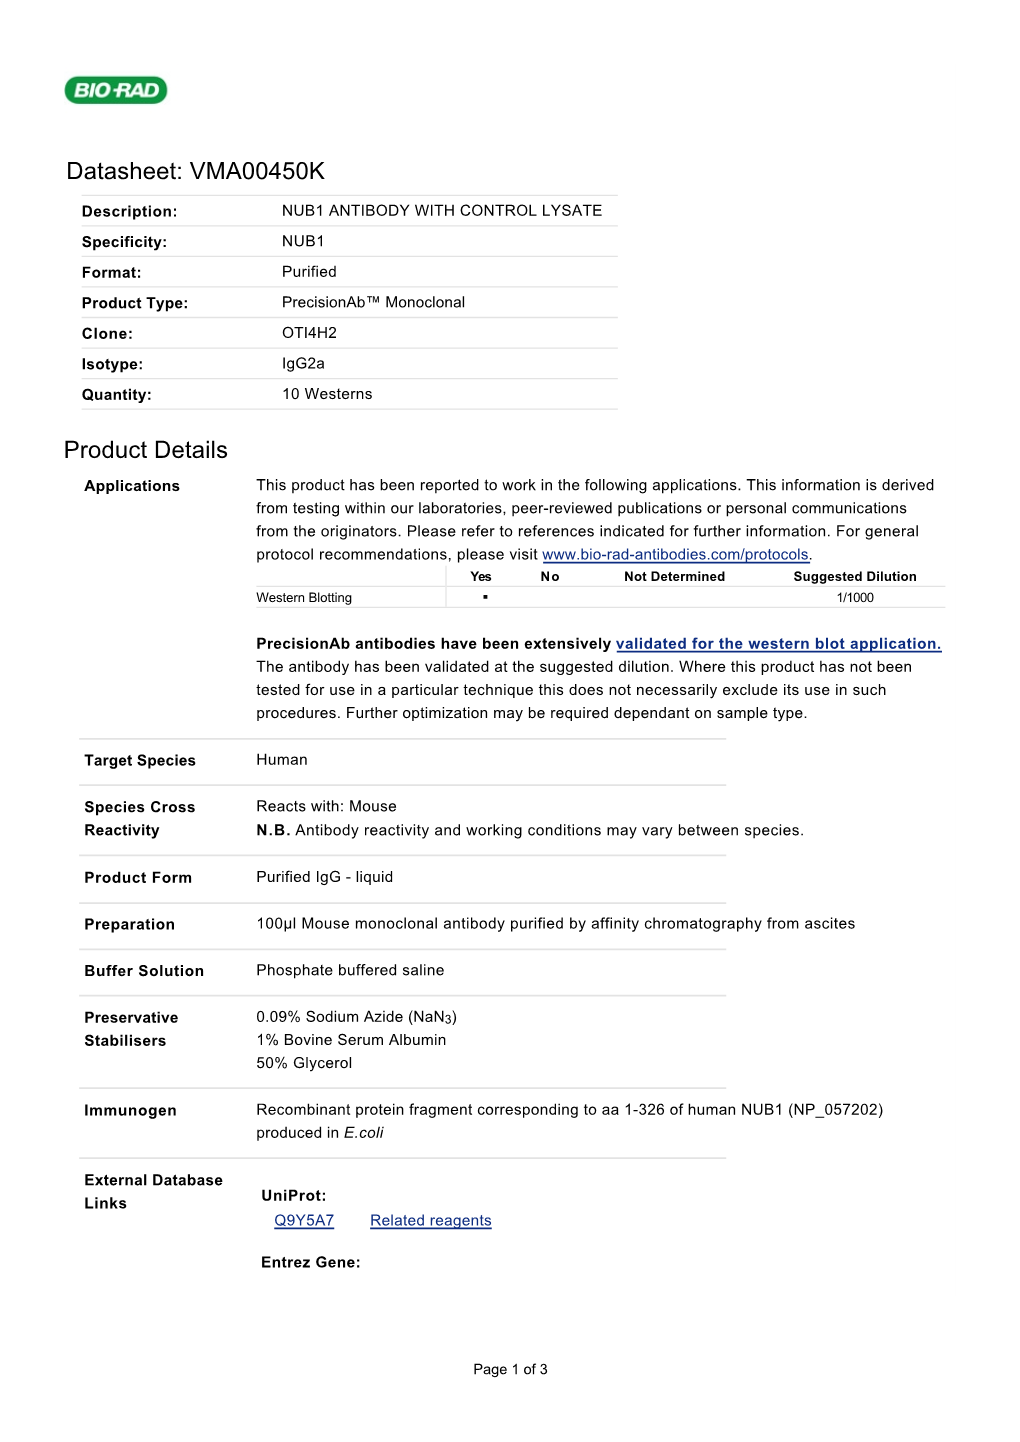 Datasheet: VMA00450K Product Details